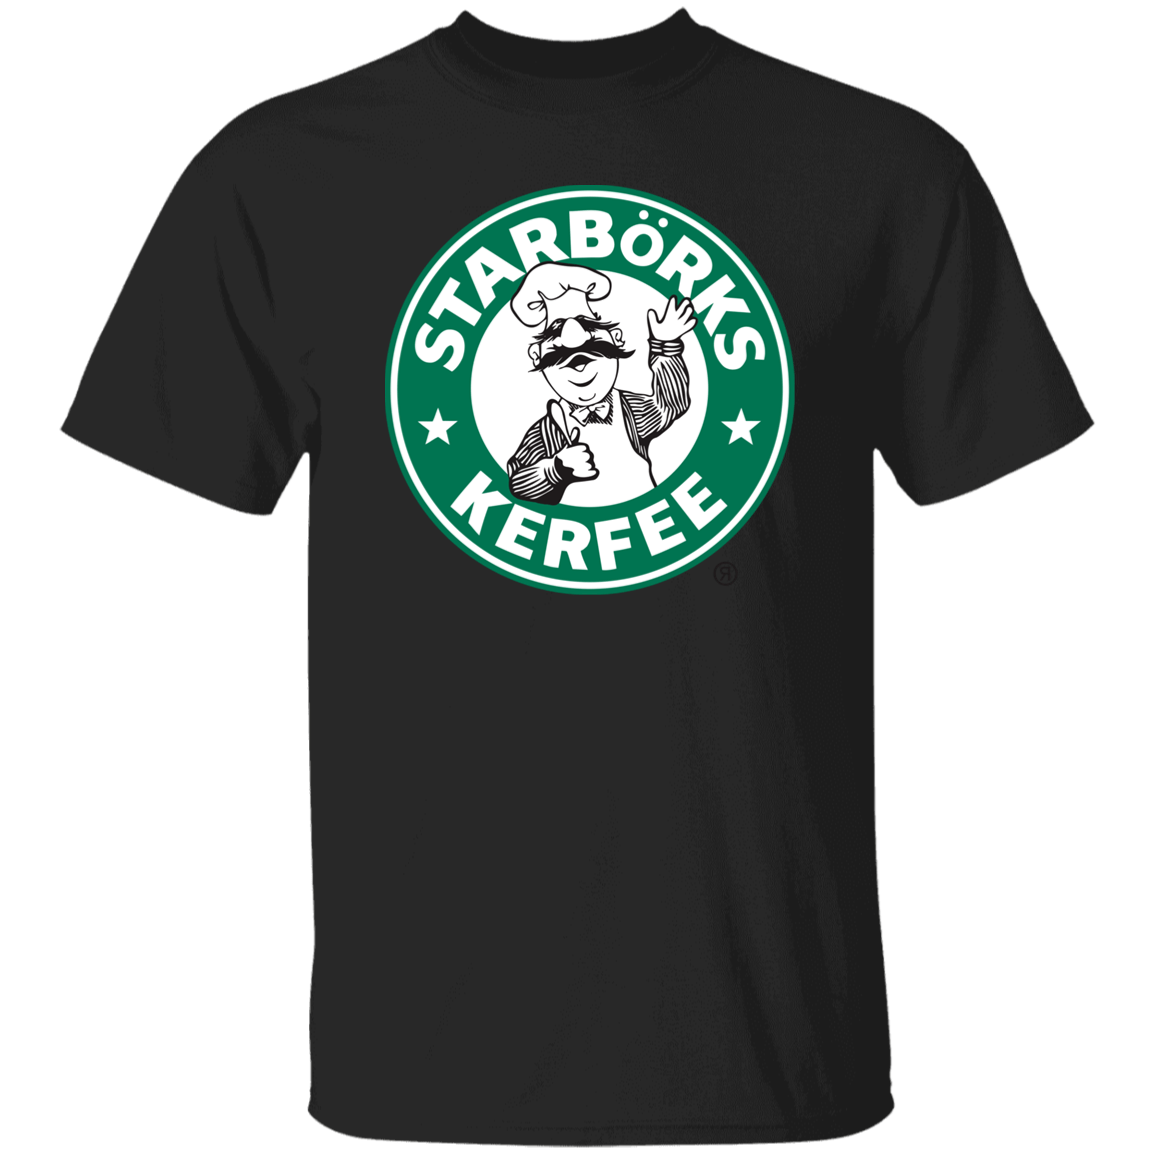 T-Shirts Black / S Starborks Kerfee T-Shirt